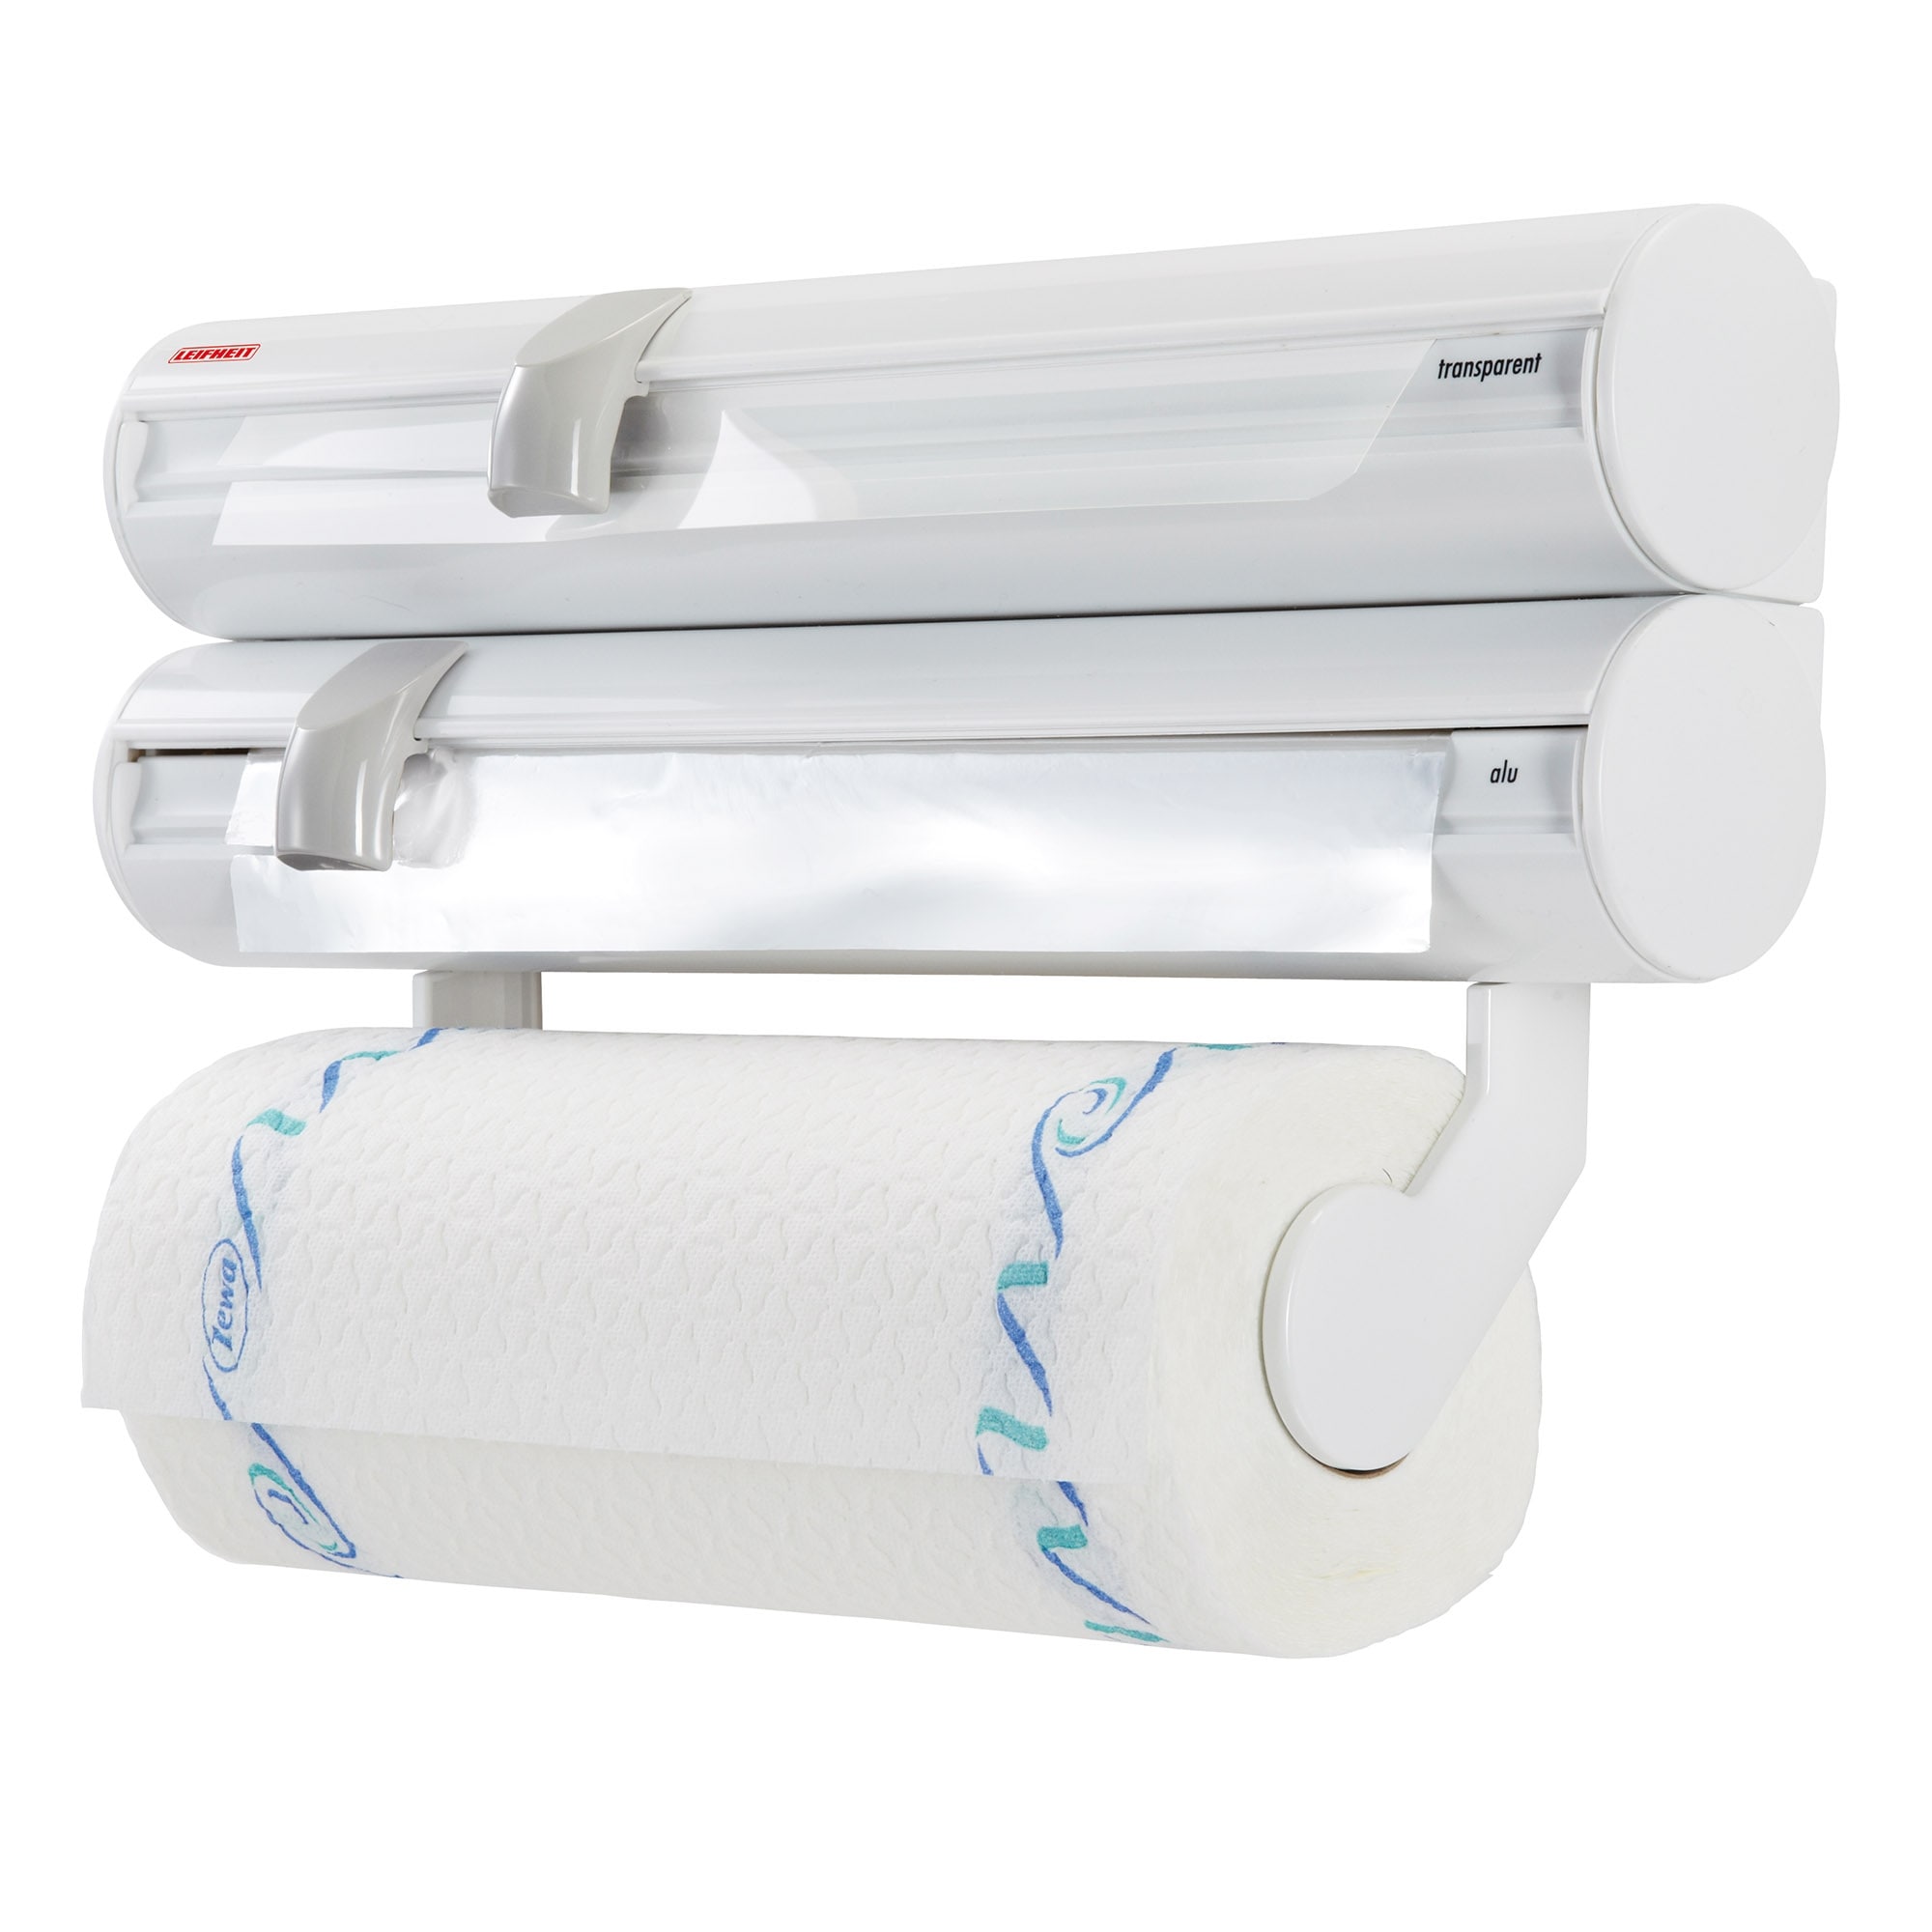 Italia Venezia Series Mega Roll Paper Holder in Polished Chrome - Bed Bath  & Beyond - 32394588